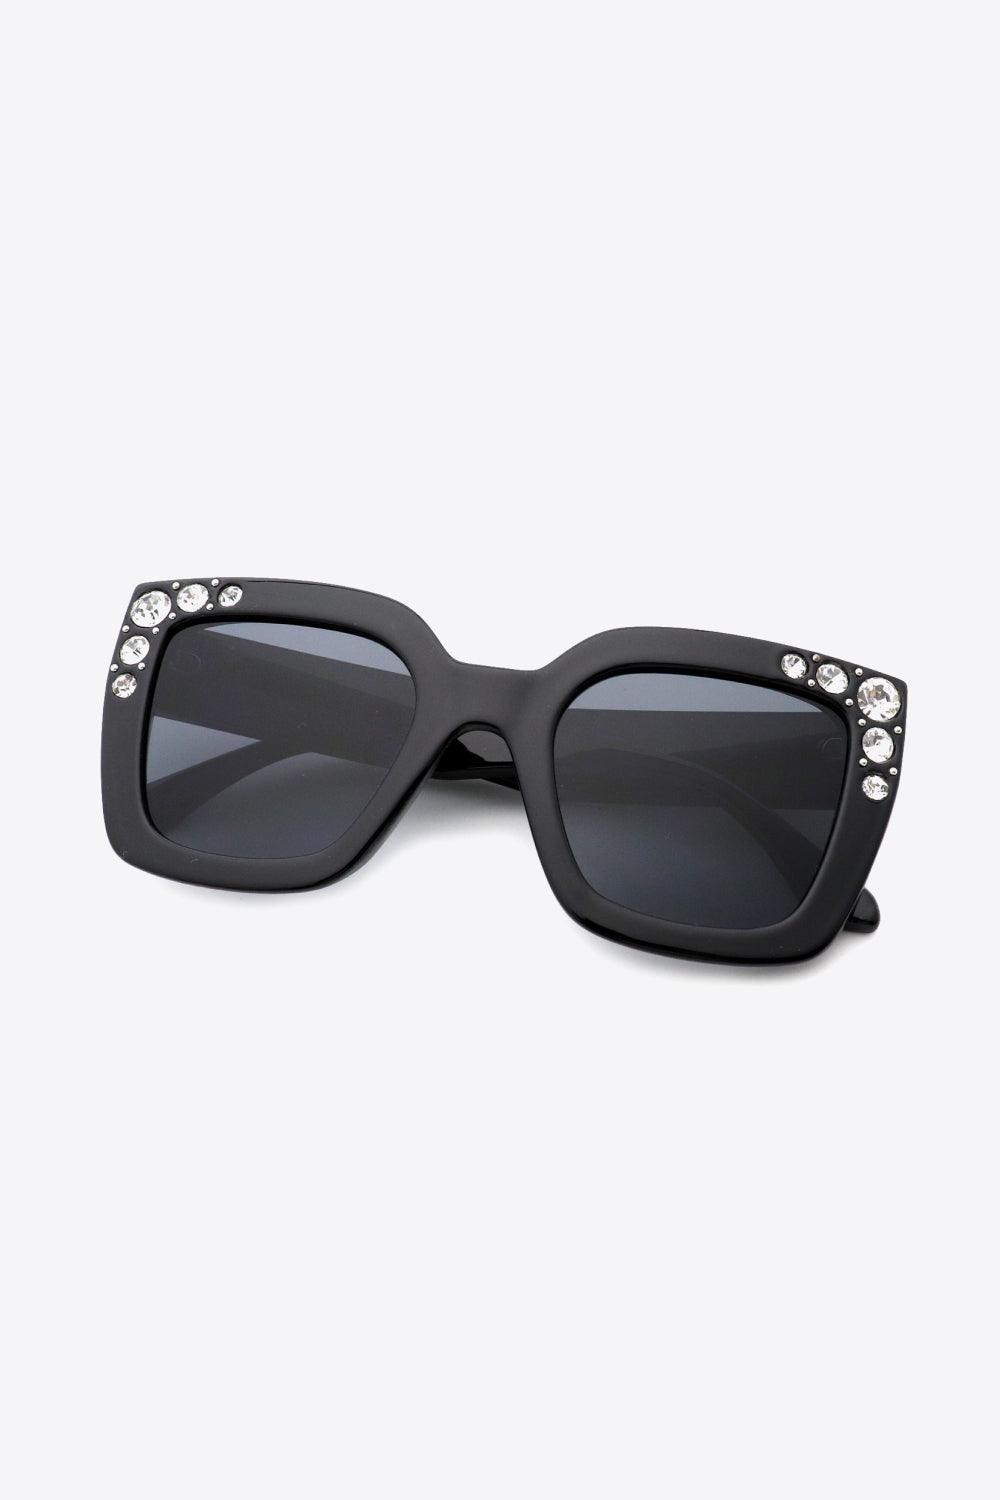 Rhinestone Polycarbonate Sunglasses - SteelBlue